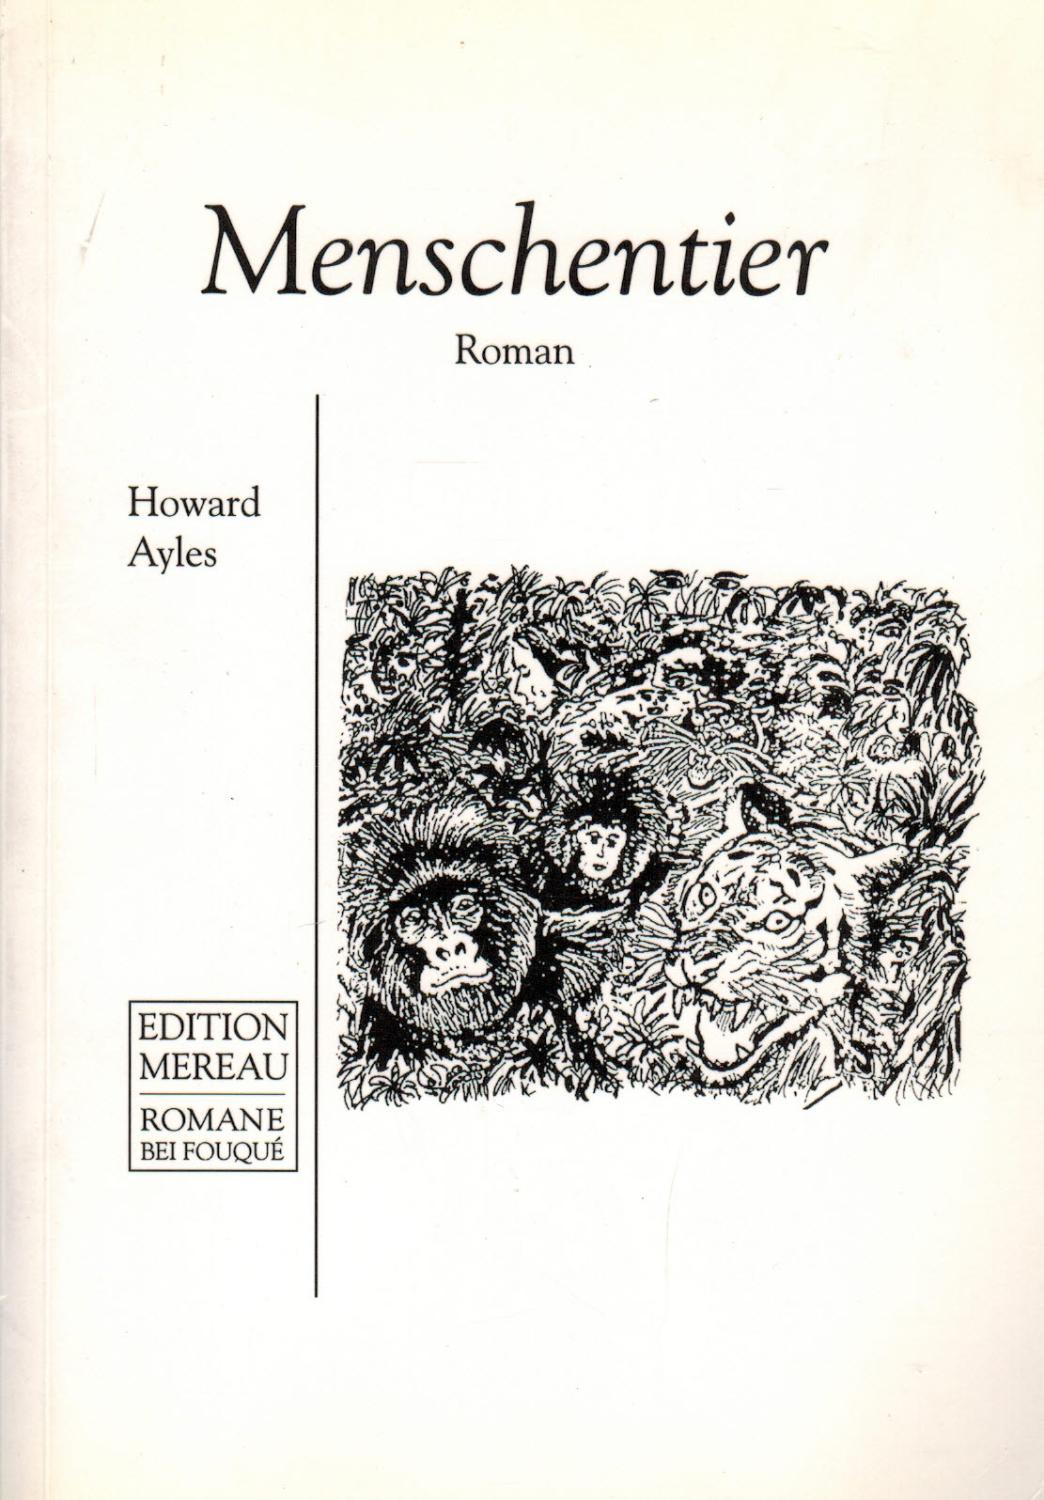 Menschentier. Roman (Edition Mereau - Romane bei Fouque) - Ayles, Howard